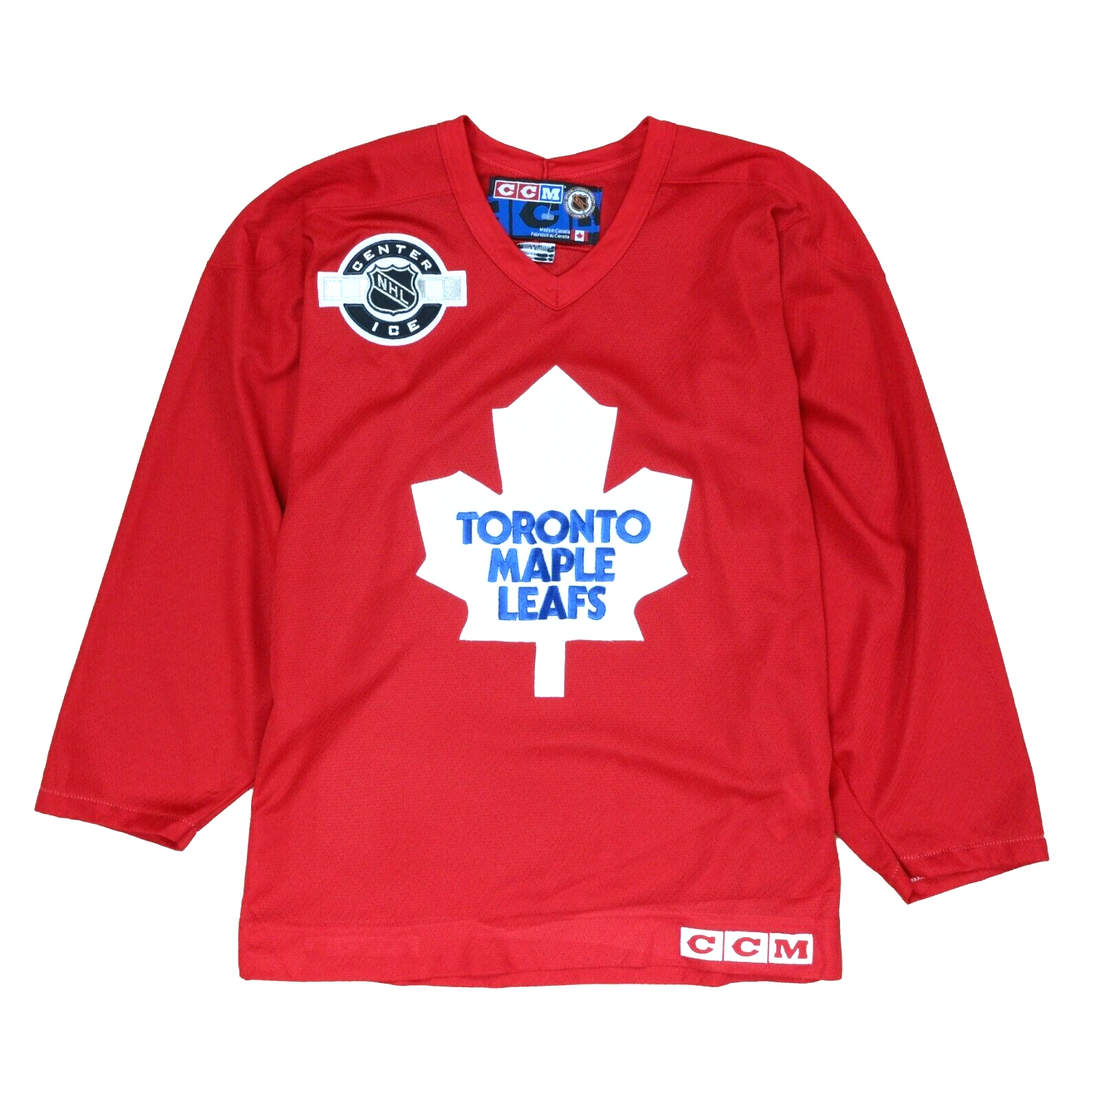 Toronto Maple Leafs Throwback Jerseys, Vintage NHL Gear